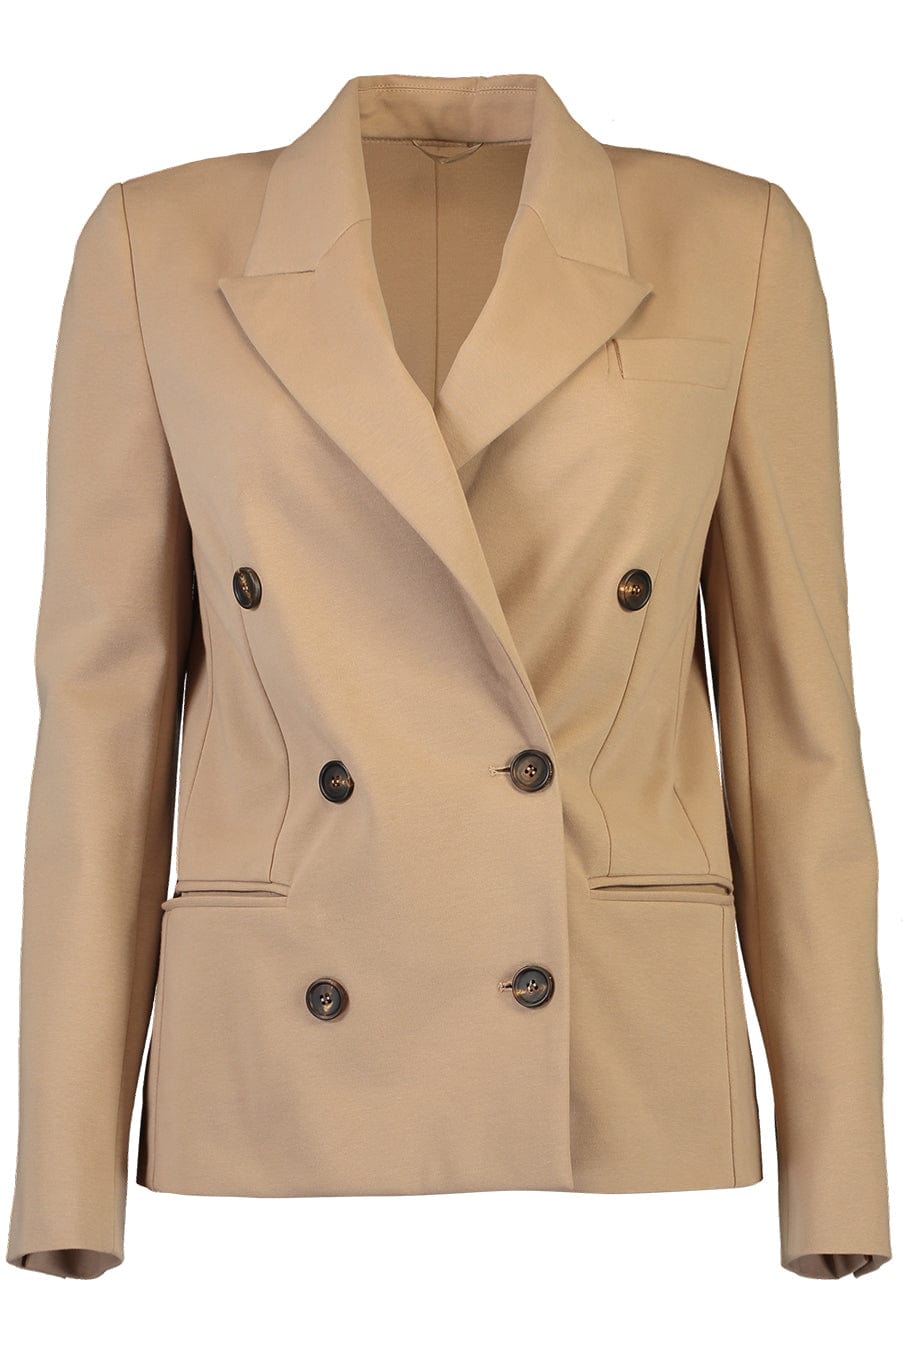 Brunello Cucinelli \ Women's \ Clothing \  Jackets & Coats